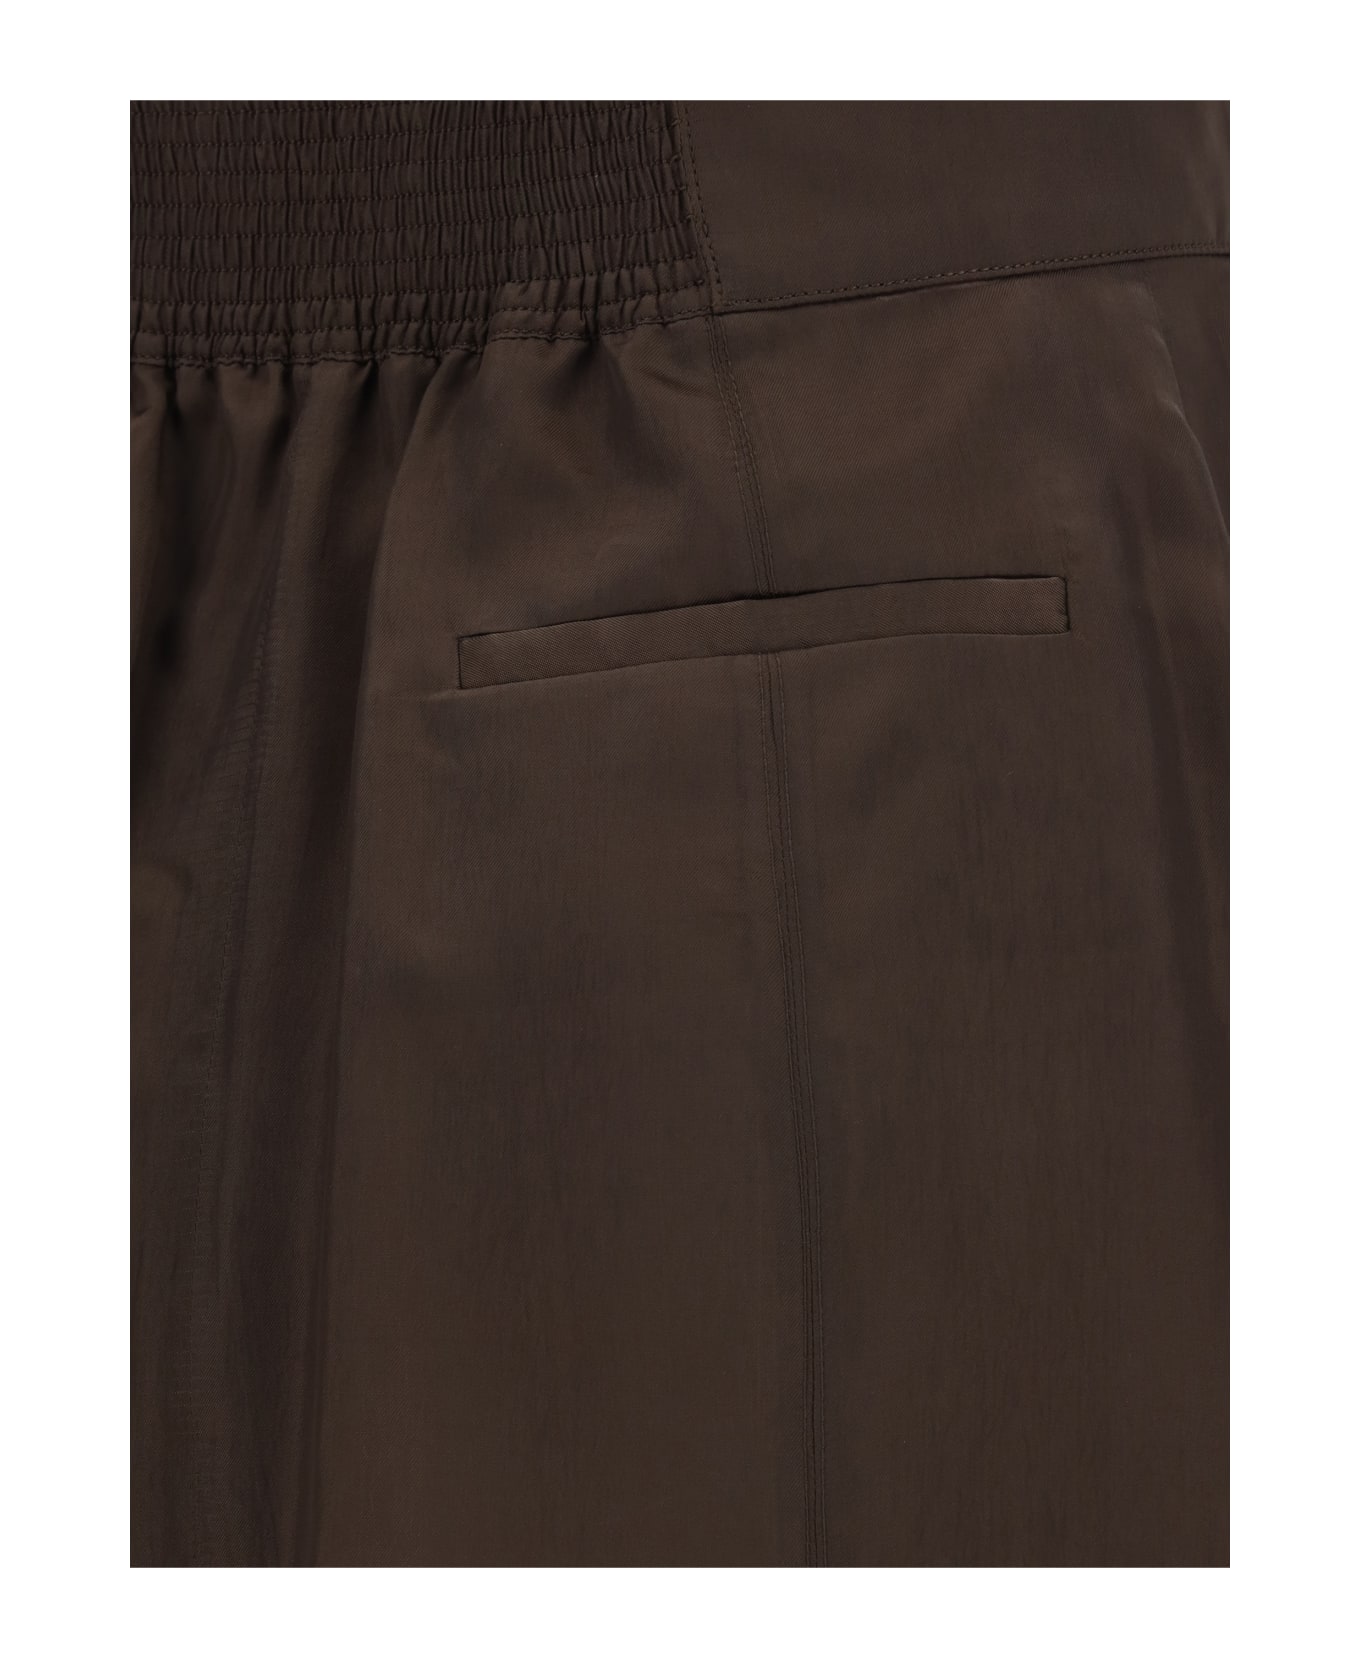 Saint Laurent Bemberg Skirt - Chocolat スカート